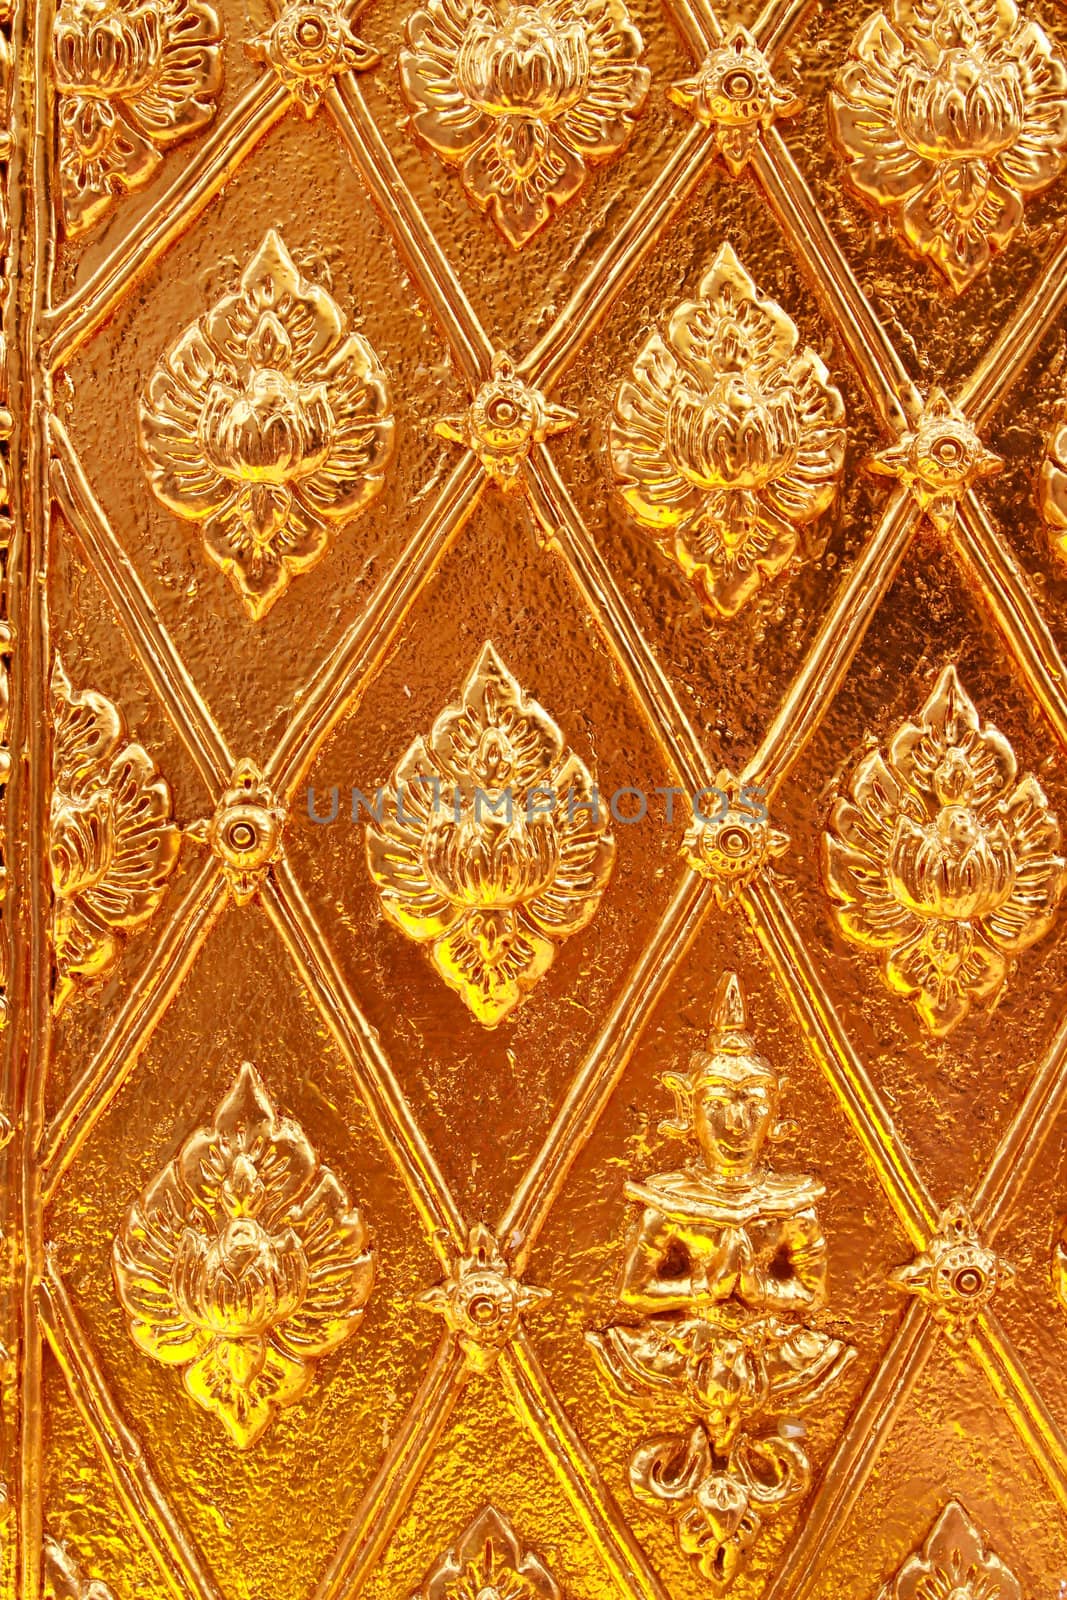 Golden Thai pattern design on temple wall